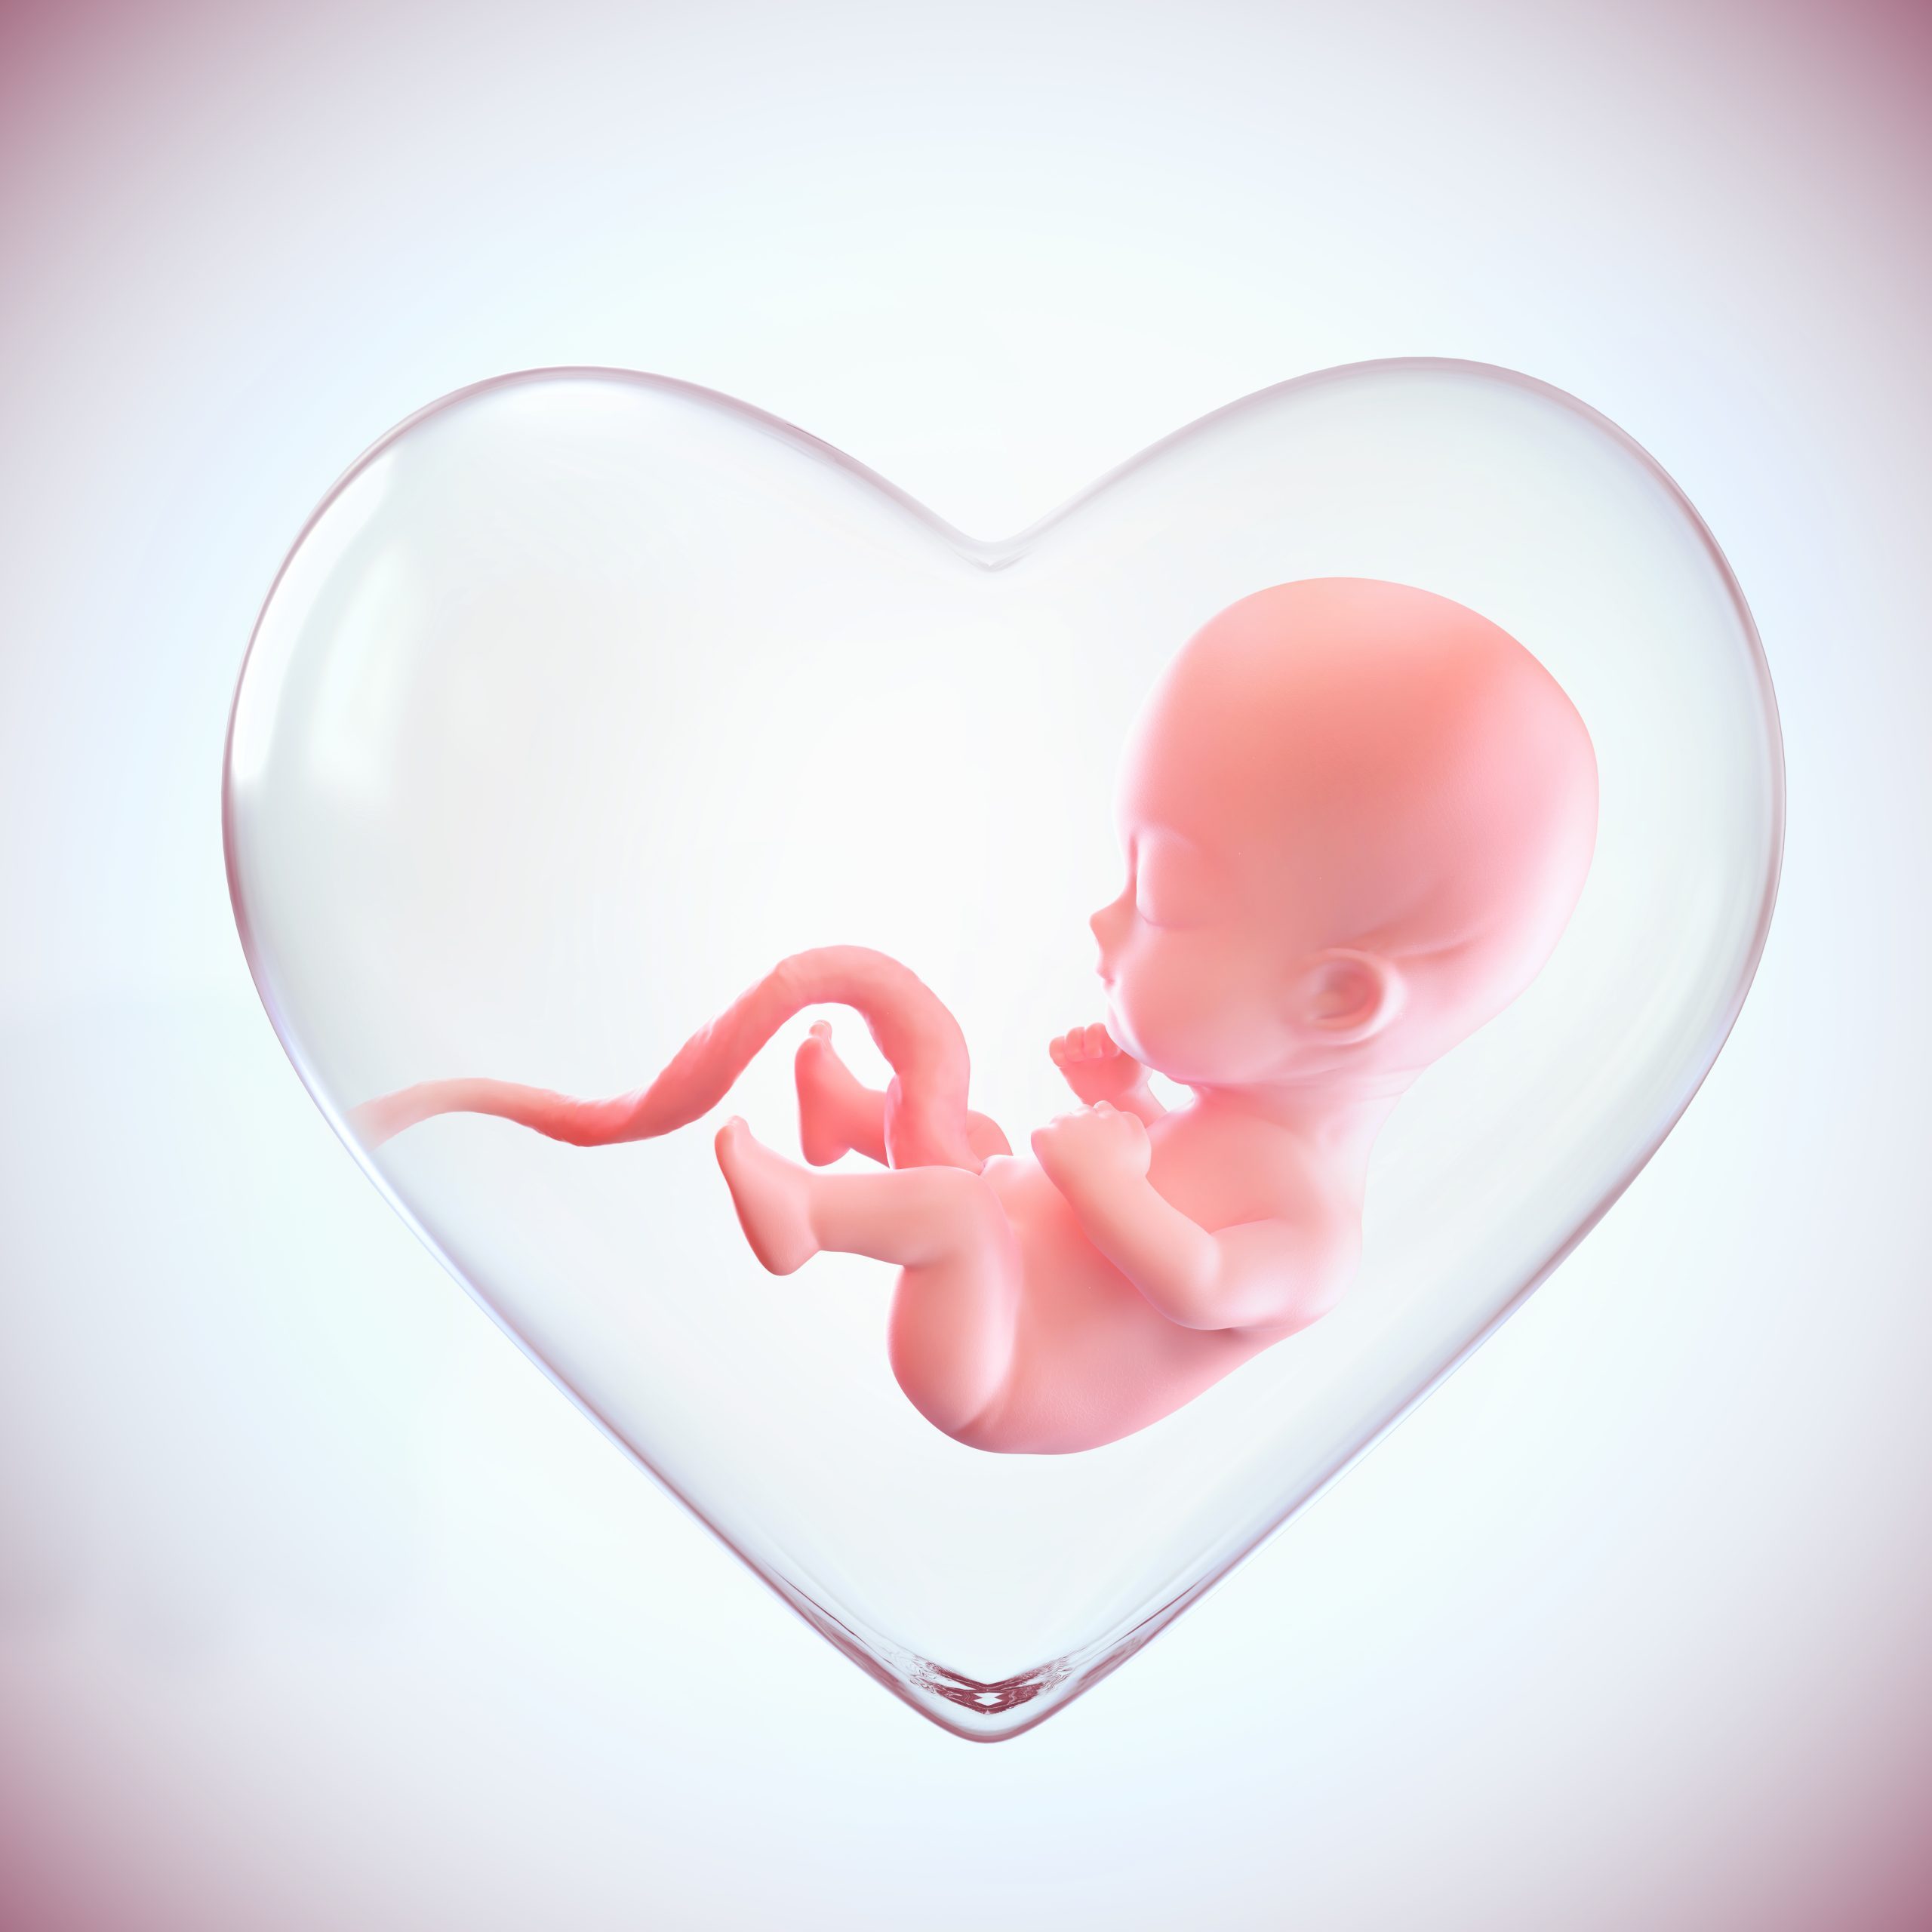 fetus inside the heart shape of womb